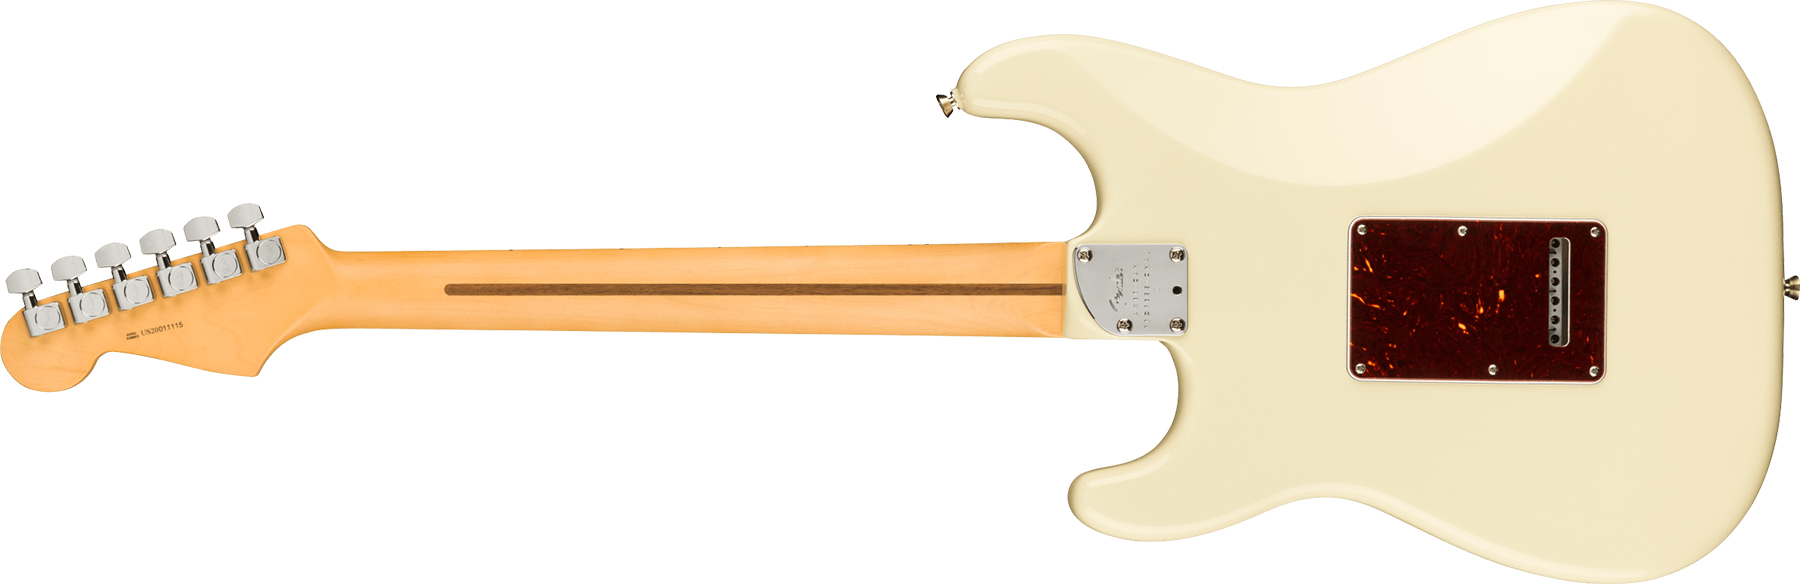 Fender Strat American Professional Ii Usa Mn - Olympic White - E-Gitarre in Str-Form - Variation 1